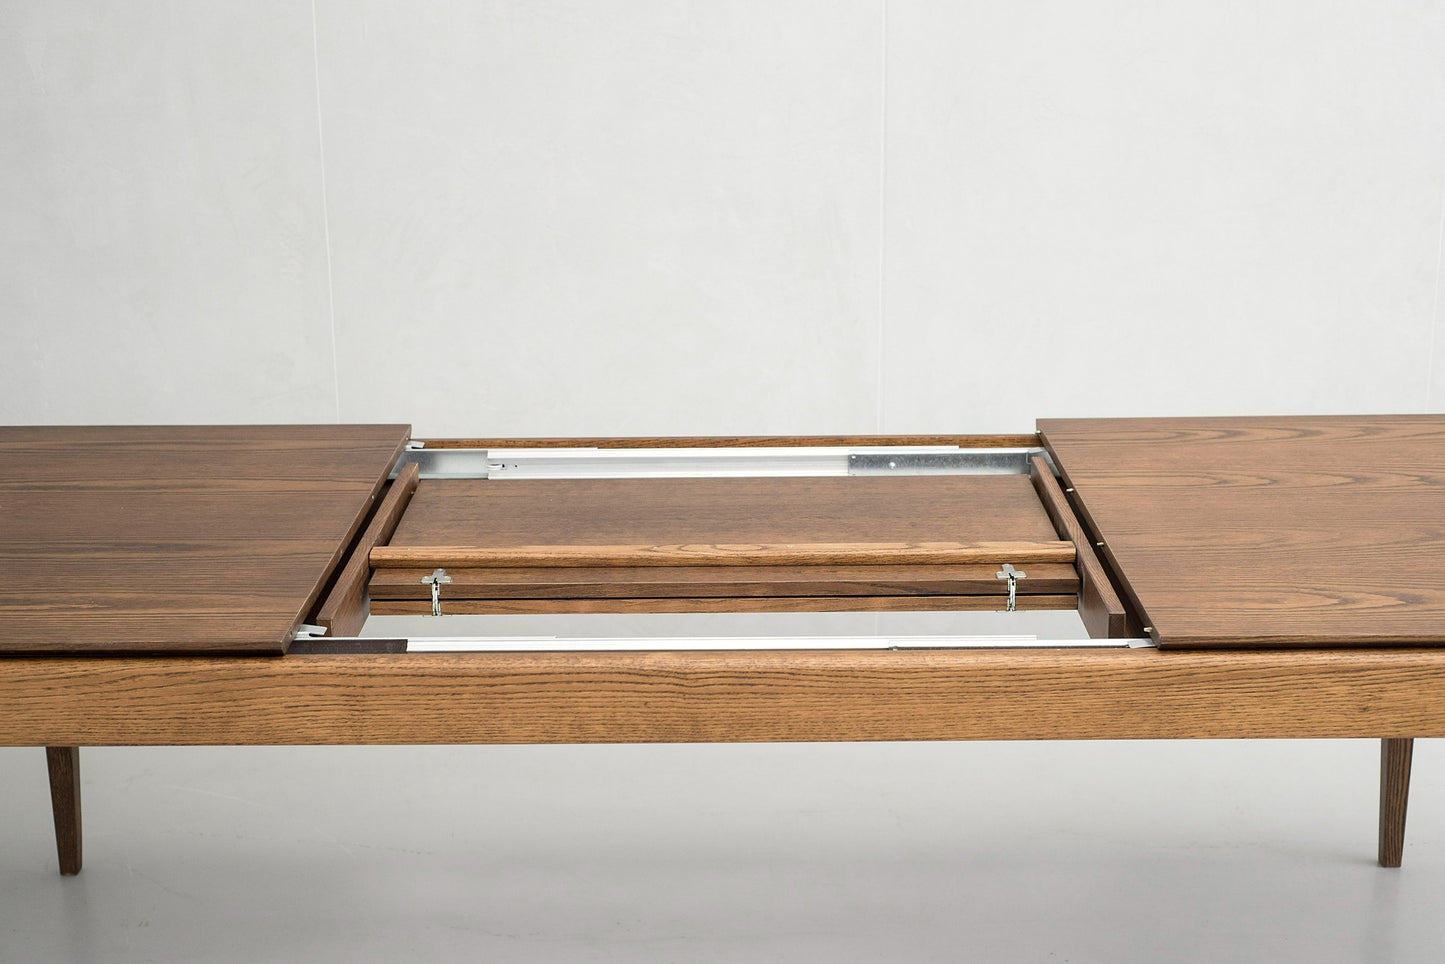 Modrest Dallas - Mid-Century Modern Brown Oak Extendable Dining Table